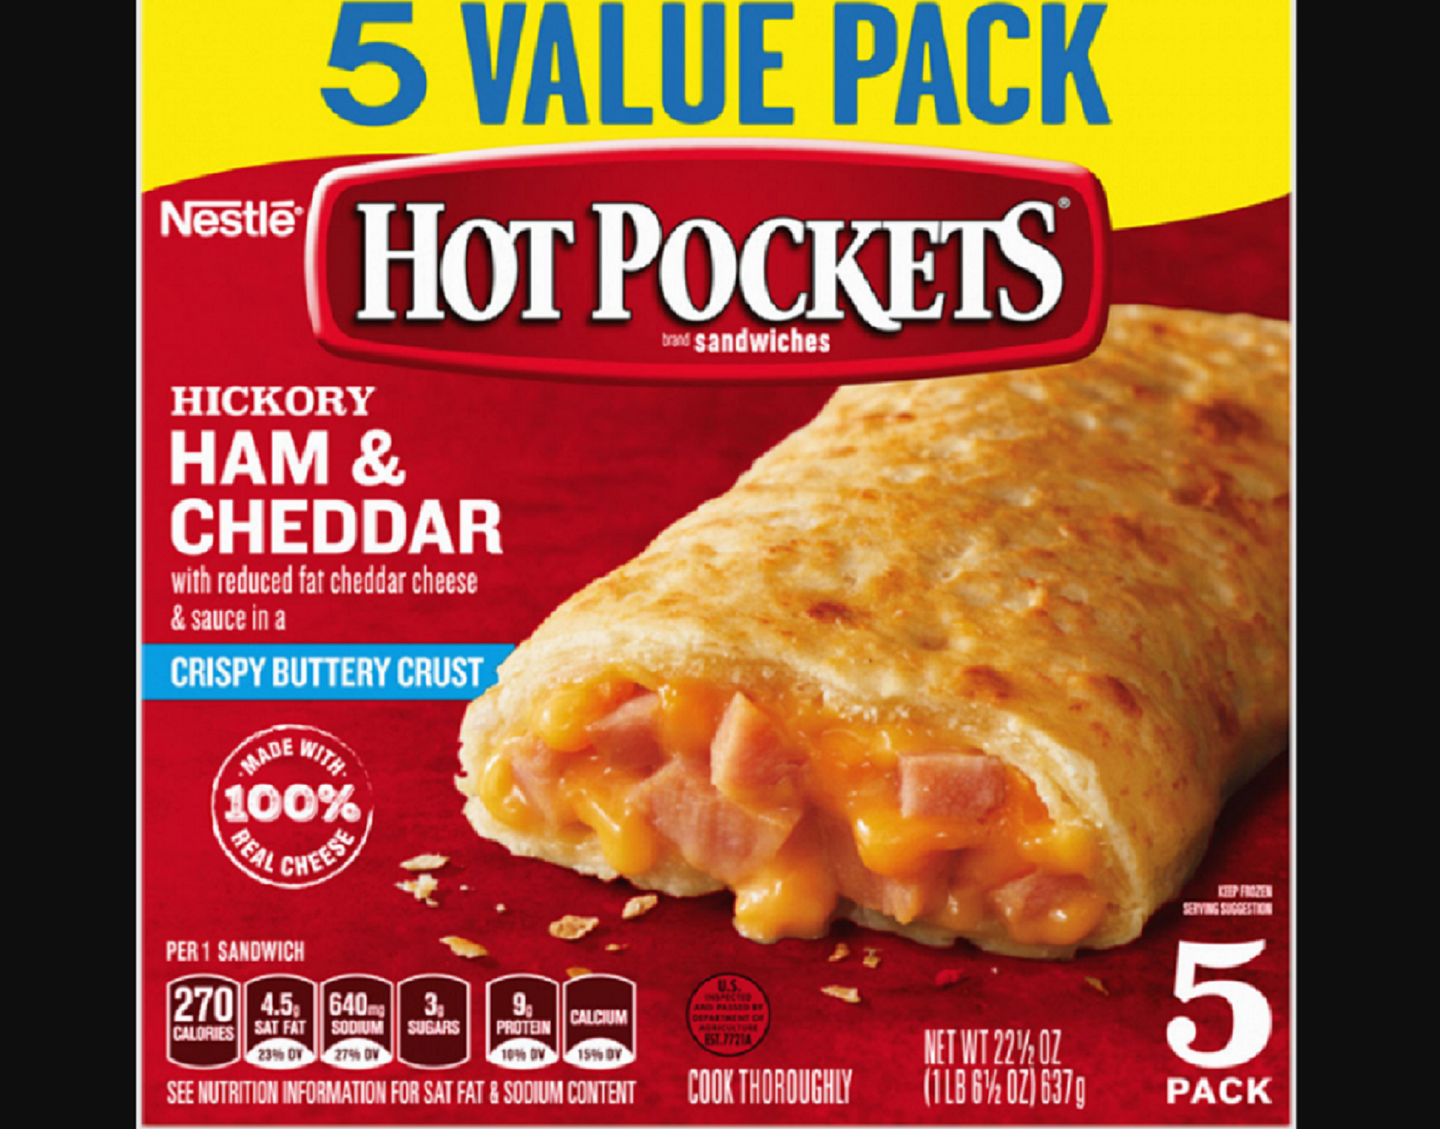 Hot Pockets hickory ham and cheese box